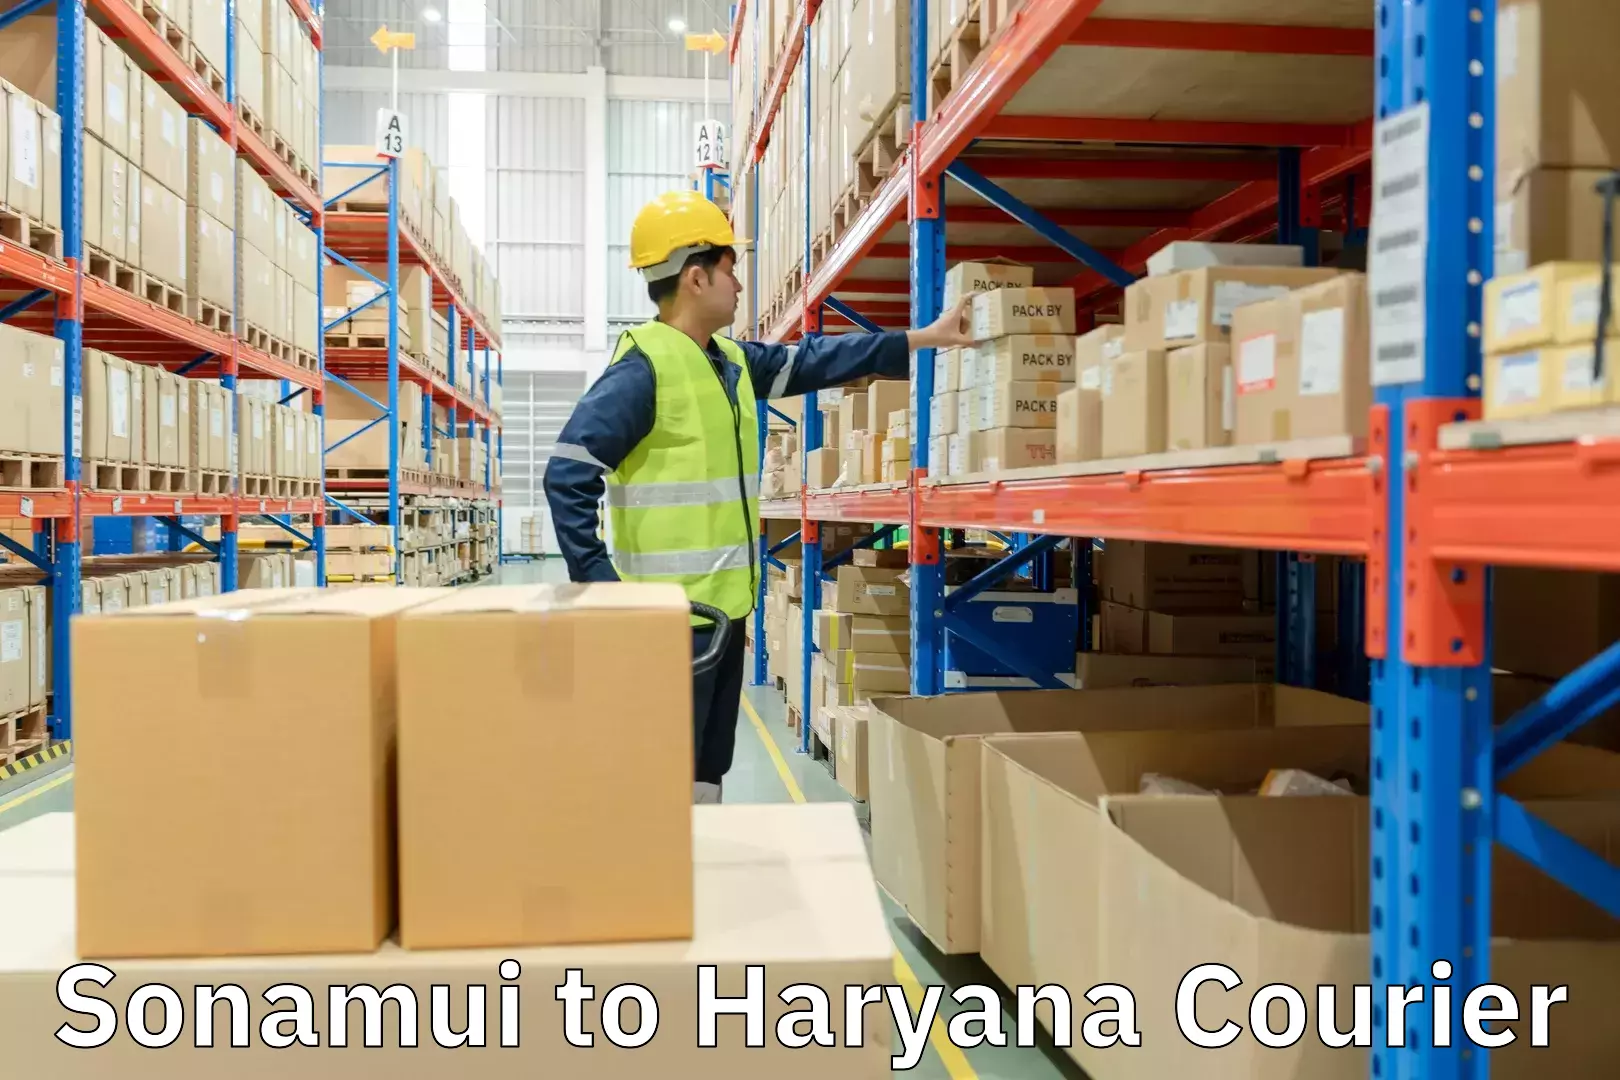 Professional courier handling Sonamui to Haryana